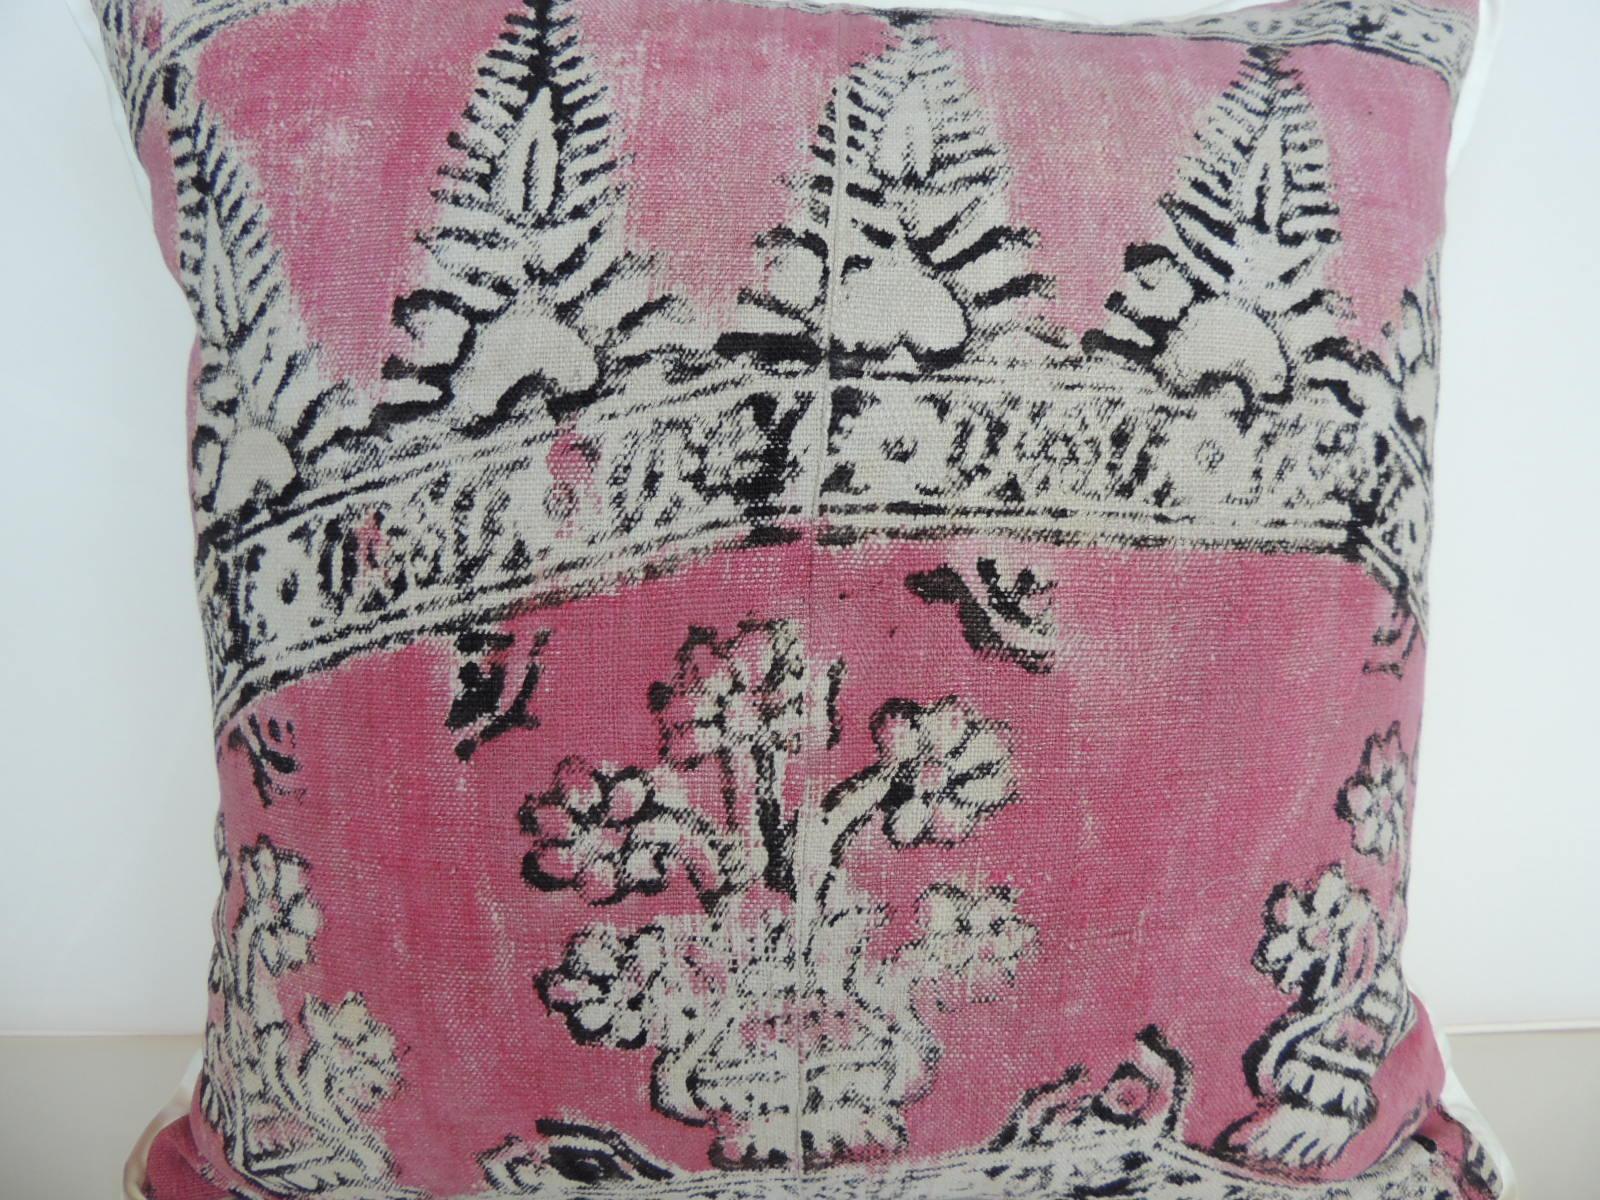 Moorish Vintage Pink and Black Hand Blocked Square Decorative Pillow